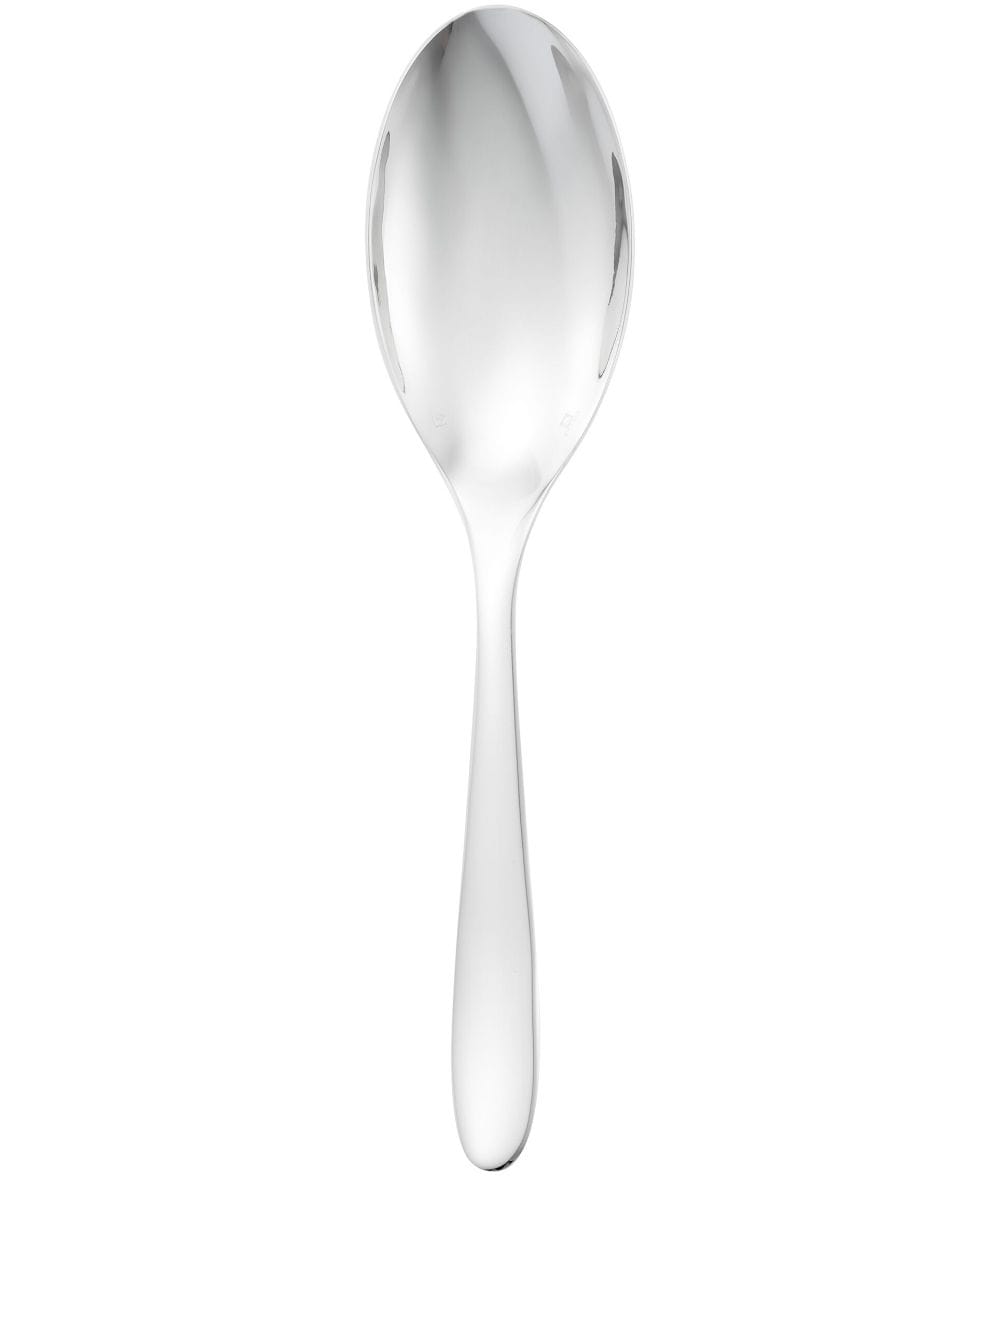 Christofle Mood serving spoon - Silver von Christofle